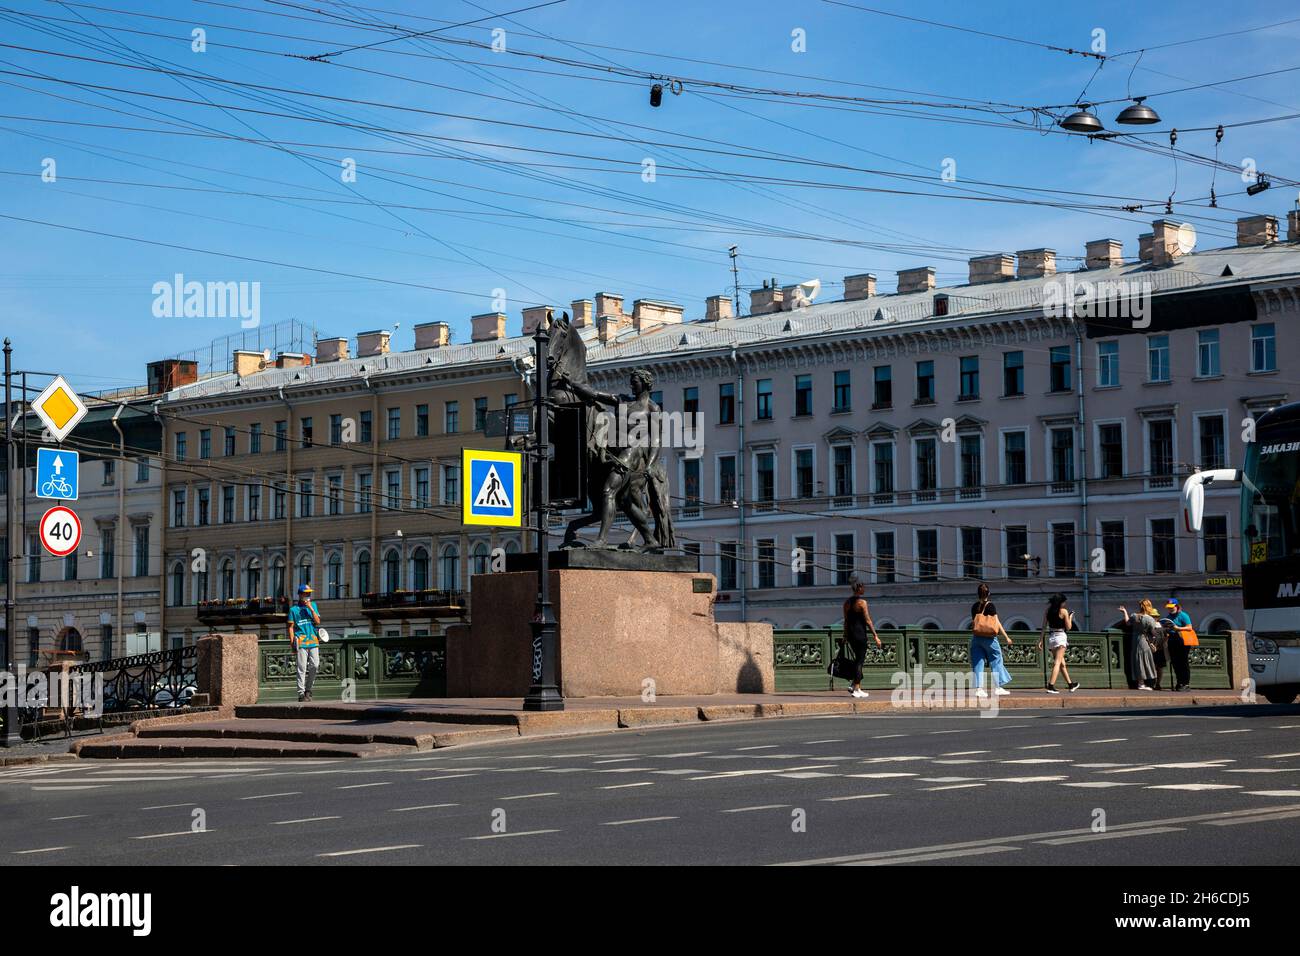 St. Petersburg, Russia - July 12, 2021: Sculpture on Anichkov Bridge in the center of St. Petersburg Stock Photo